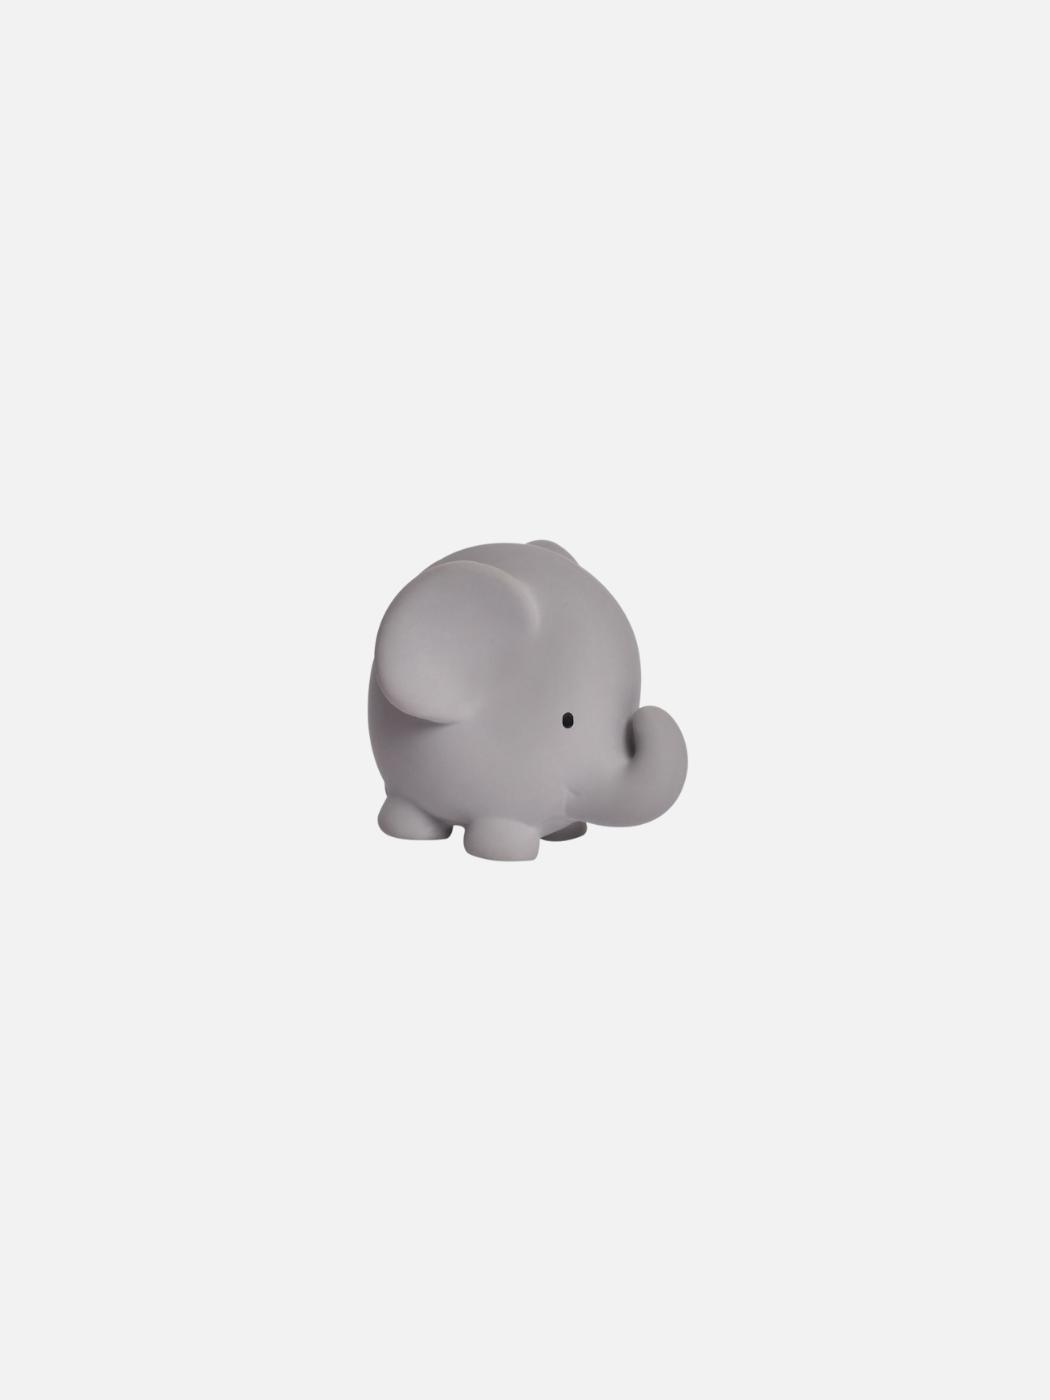 Rubber elephant baby teething toy